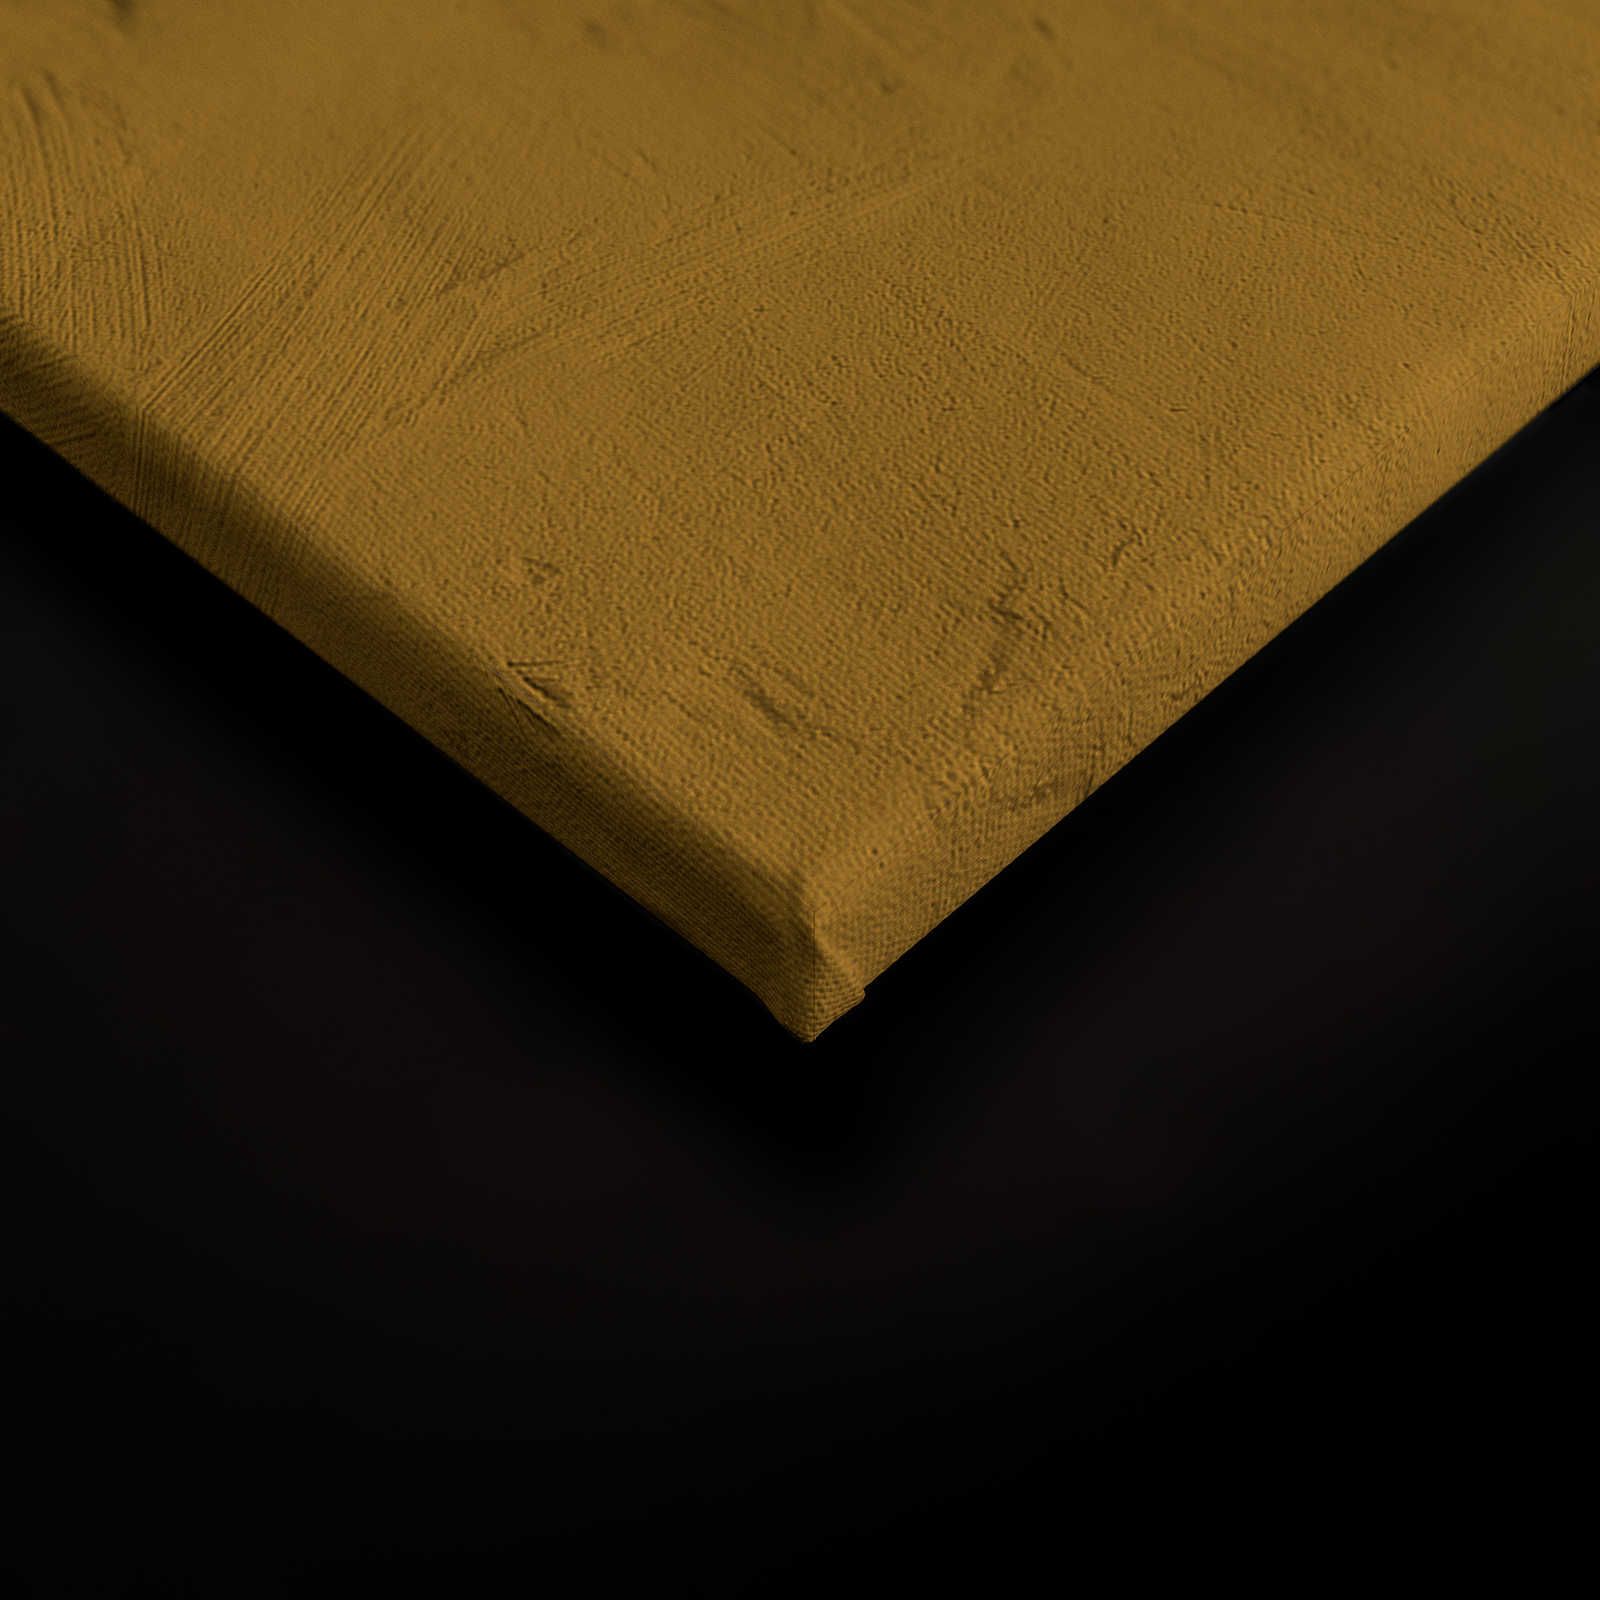             Zulu 1 - Toile jaune moutarde, Africa Masks Zulu Style - 0,90 m x 0,60 m
        